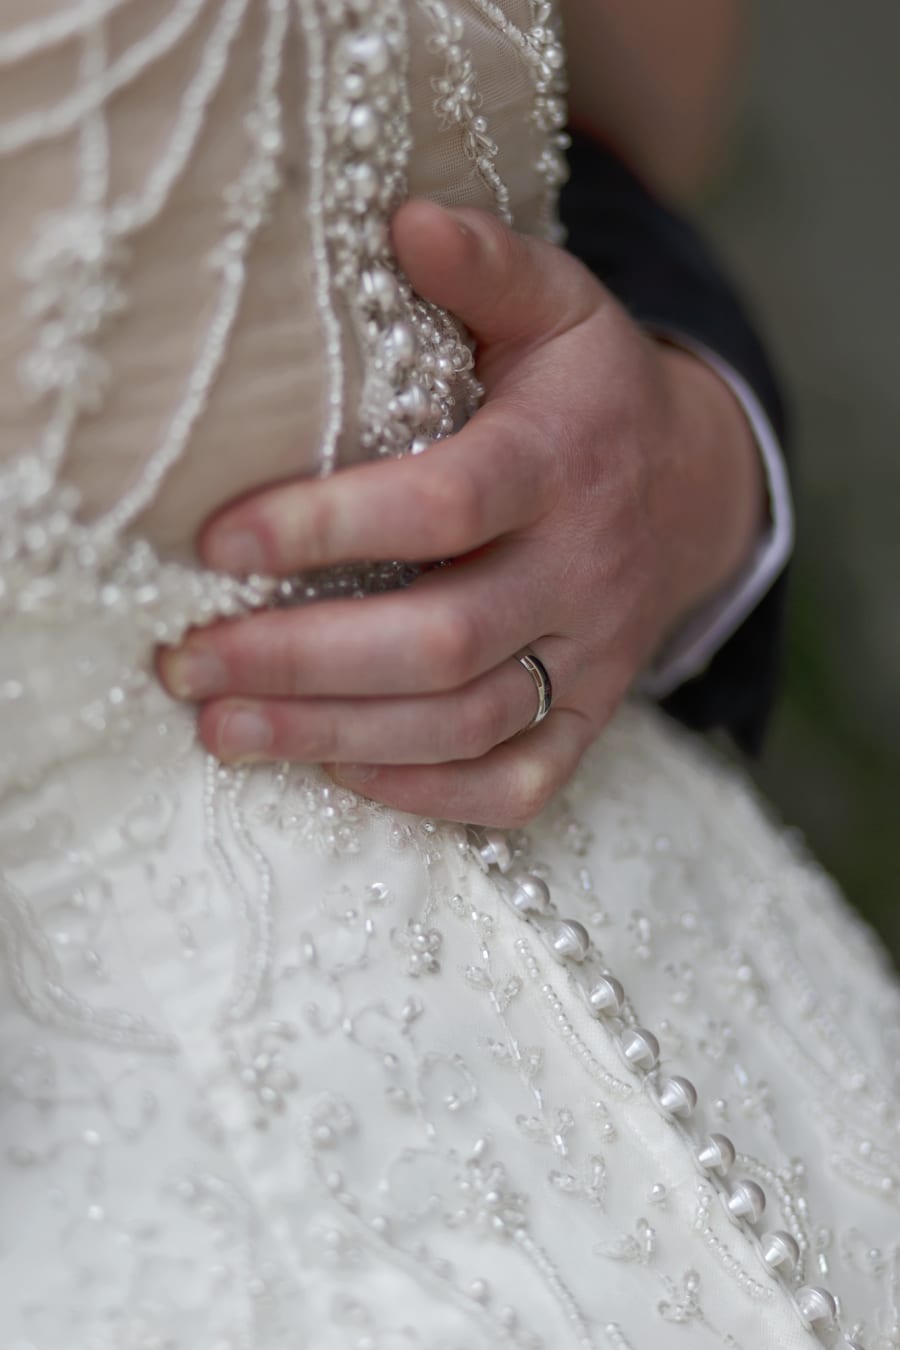 South East | Surrey | Shepperton | Summer | DIY | Classic | Country |Lavender | Gold | Film Studios | Manor House | Real Wedding | Graham Mansfield #Bridebook #RealWedding #WeddingIdeas Bridebook.co.uk 